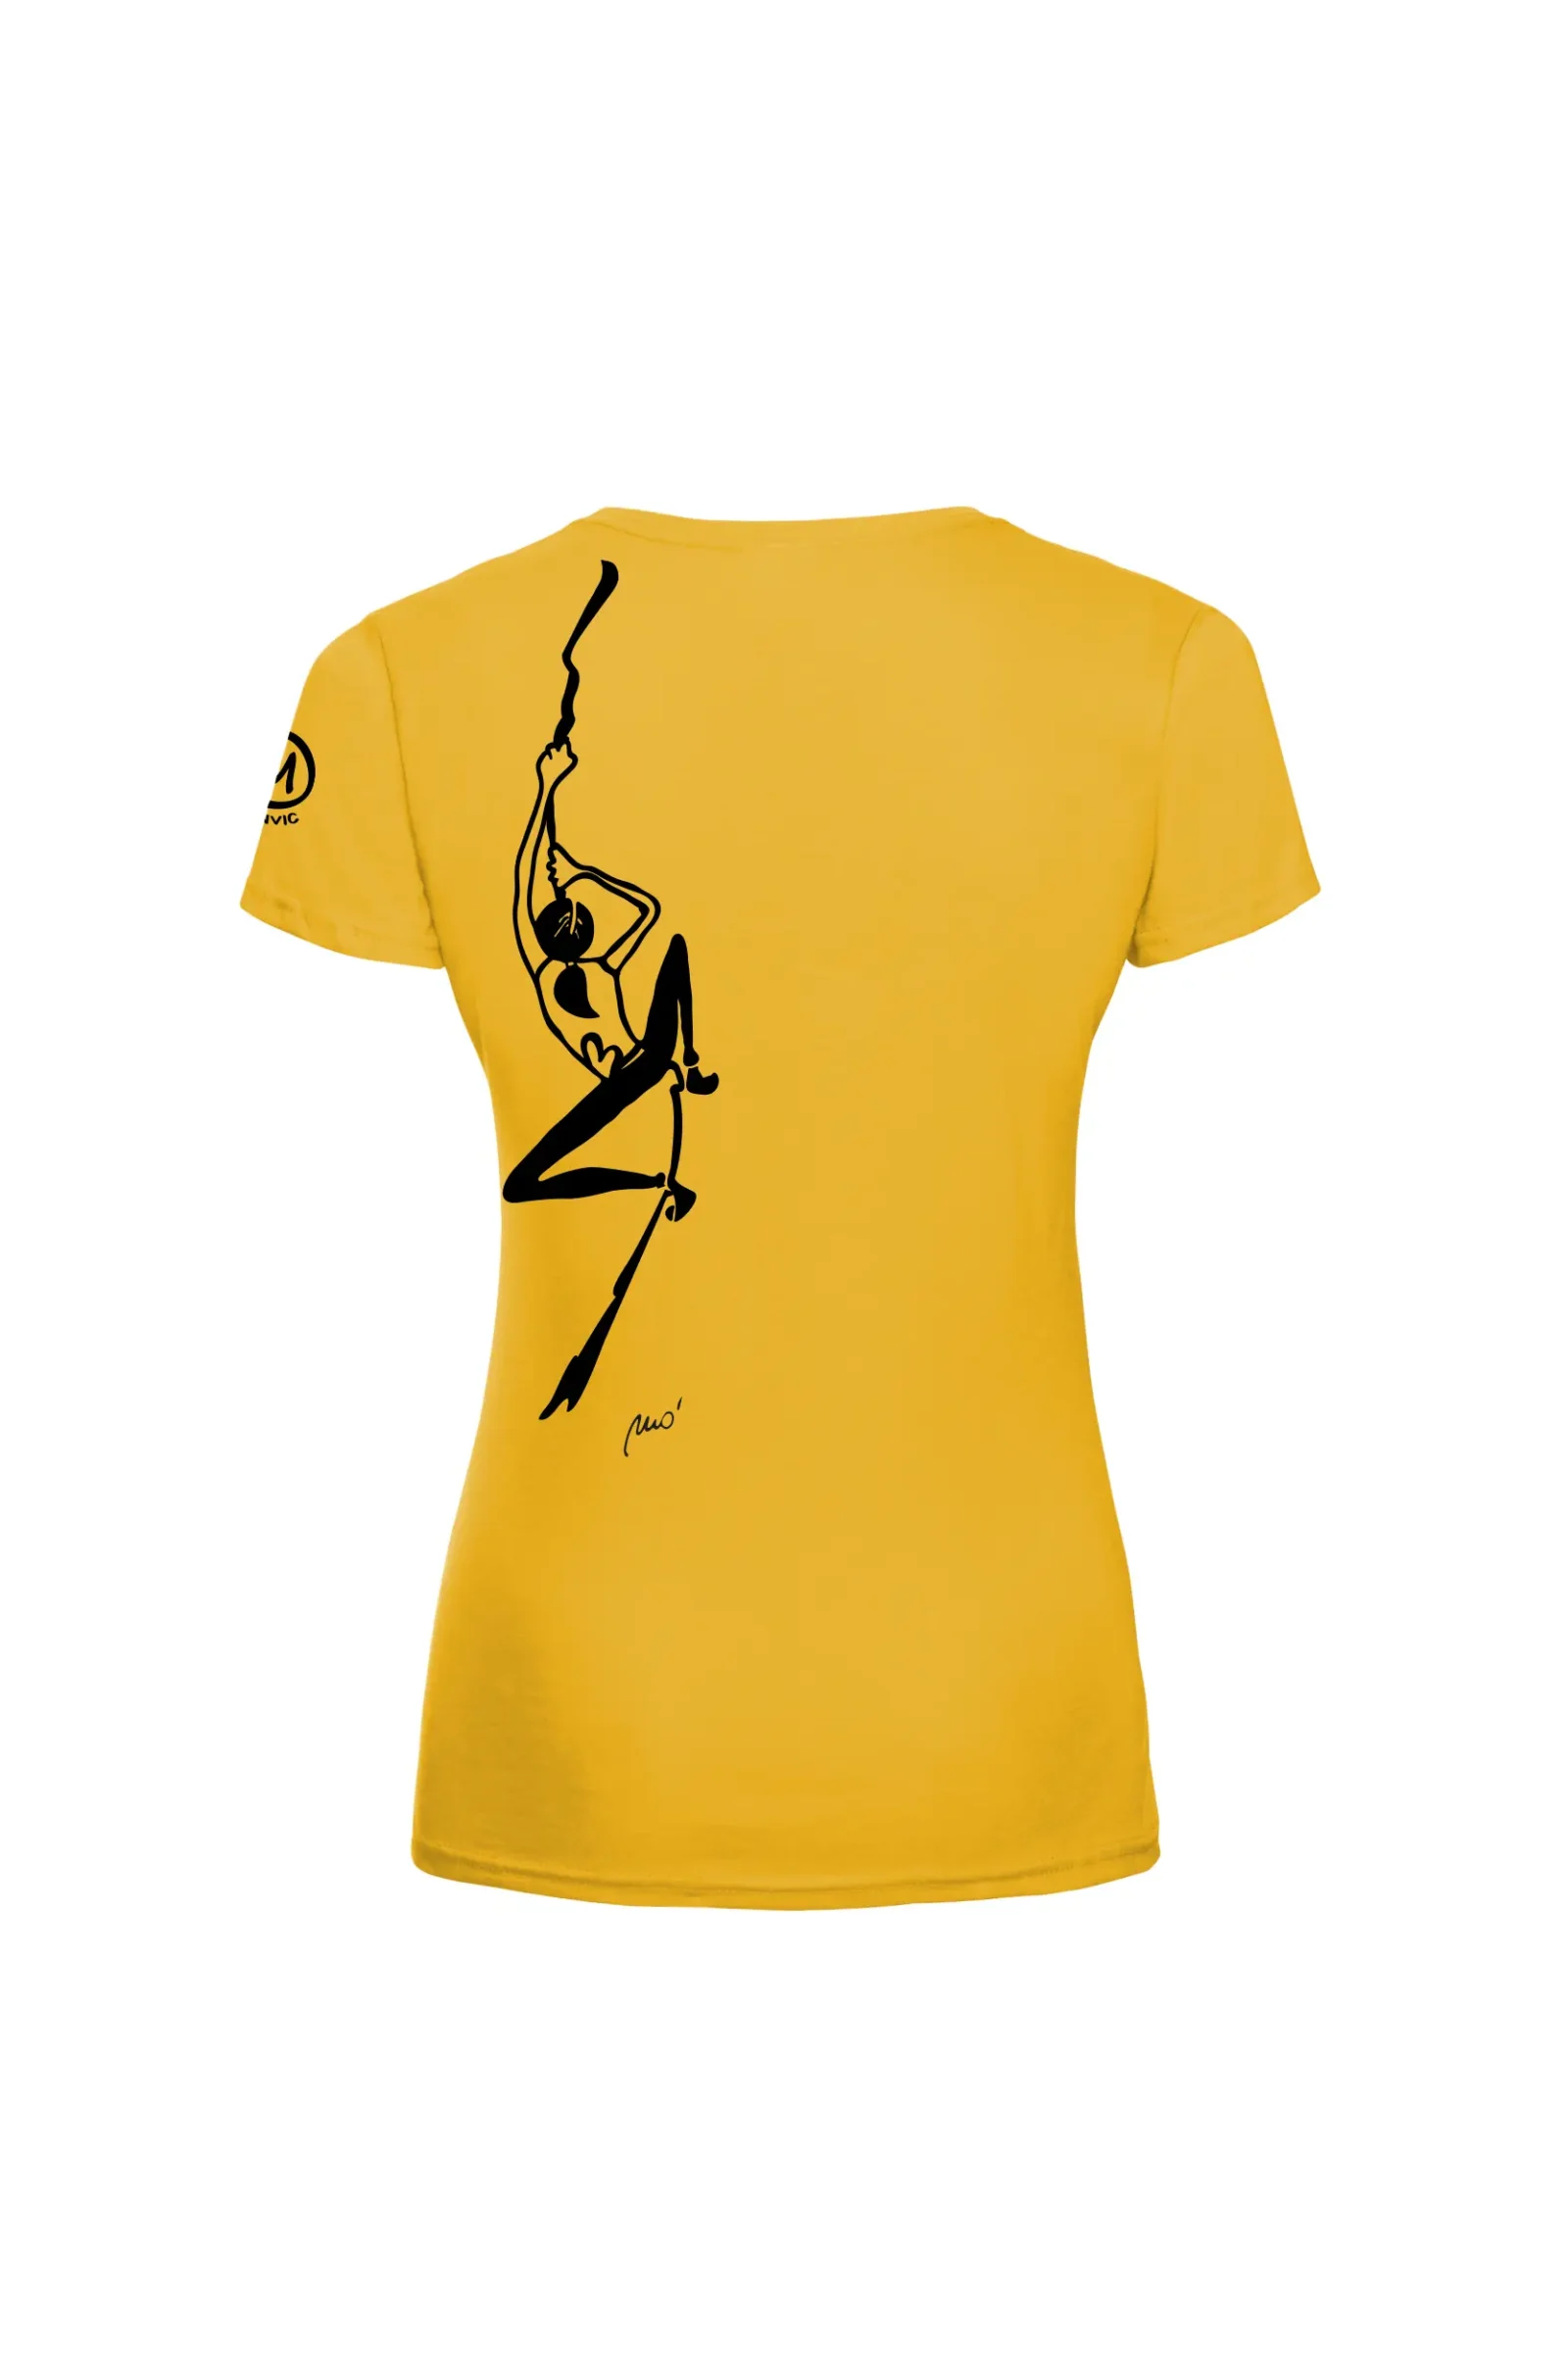 T-shirt arrampicata donna - cotone giallo - grafica "Sabry" - SHARON by MONVIC